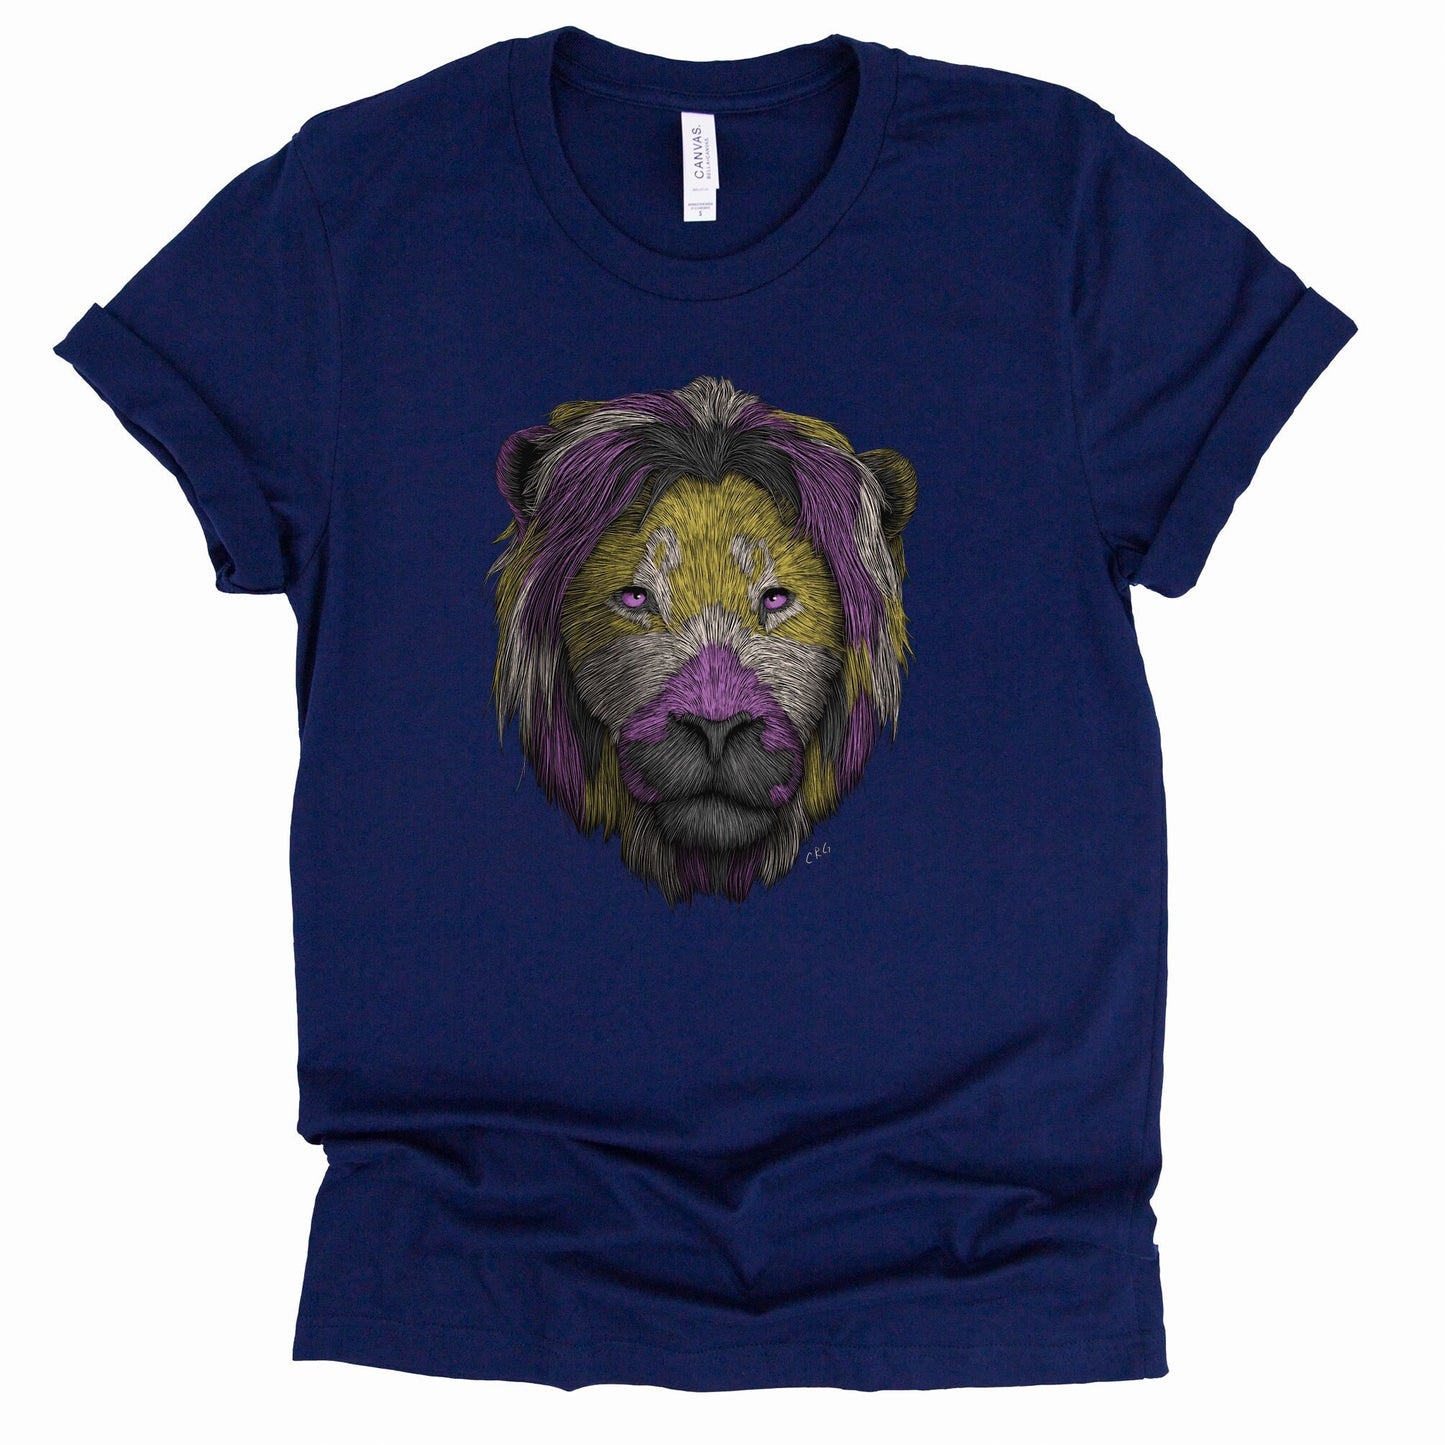 Nonbinary Lion Shirt